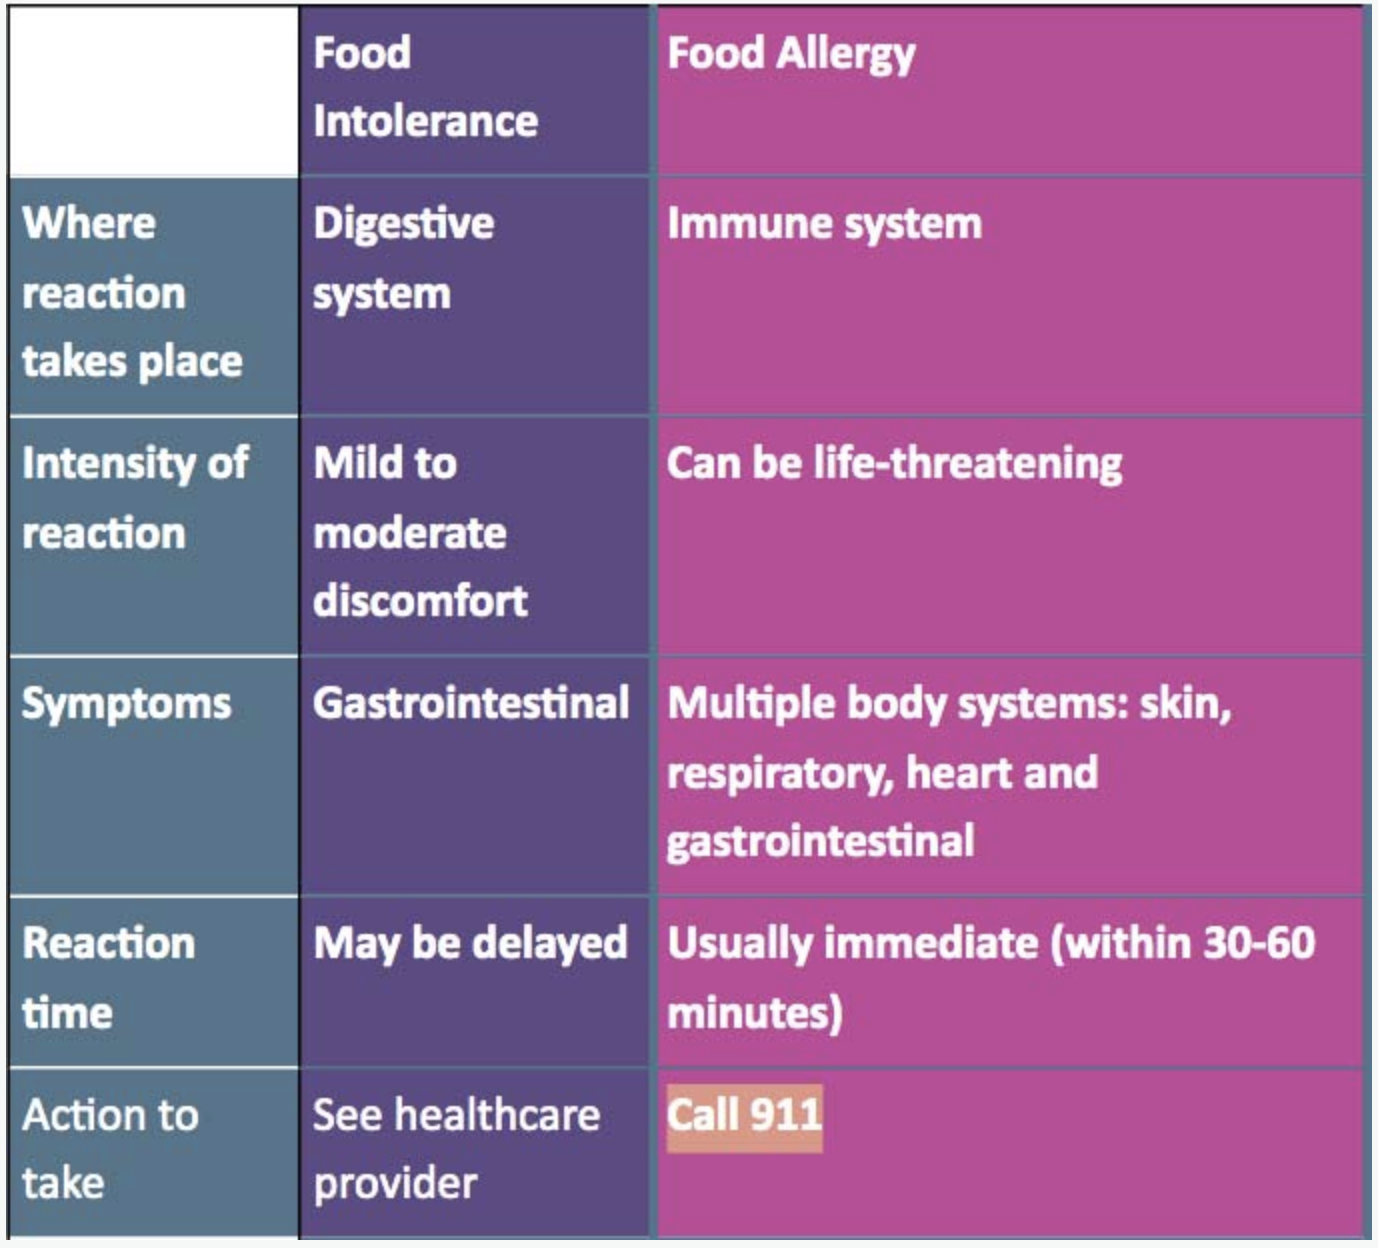 Food intolerance vs food allergy comparison chart